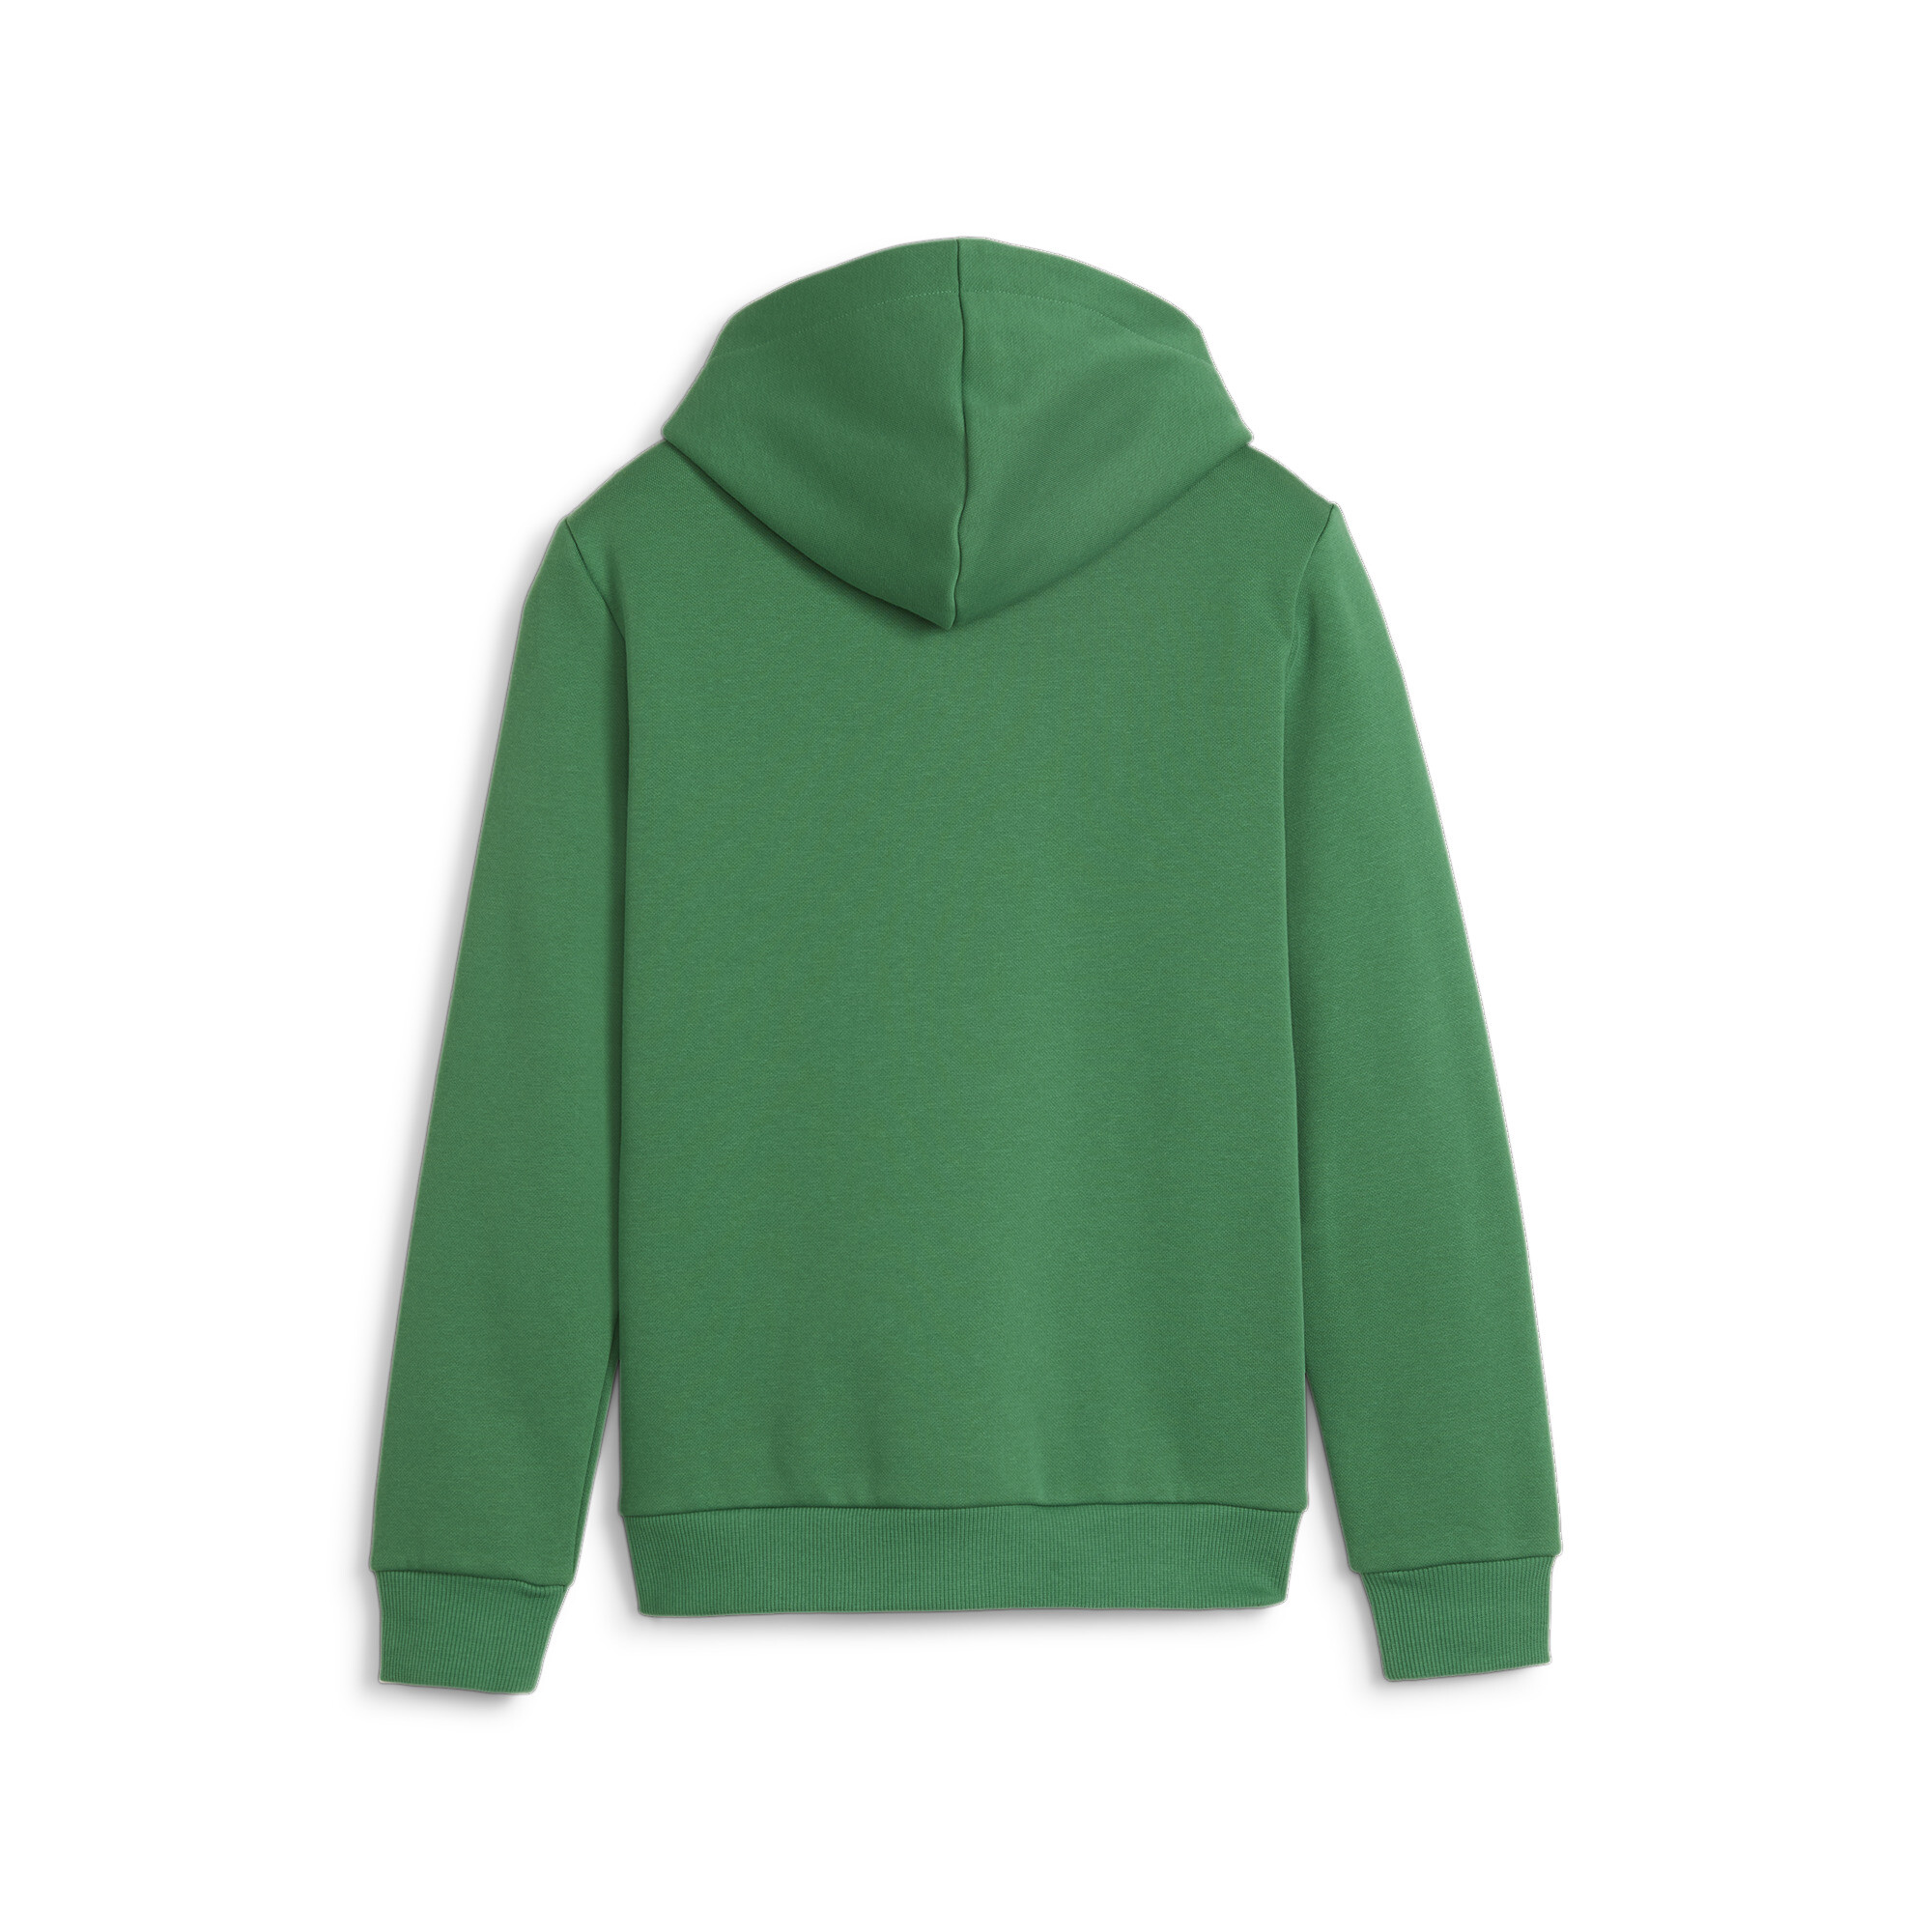 PUMA Essentials+ Two-Tone Big Logo Hoodie In Green, Size 9-10 Youth